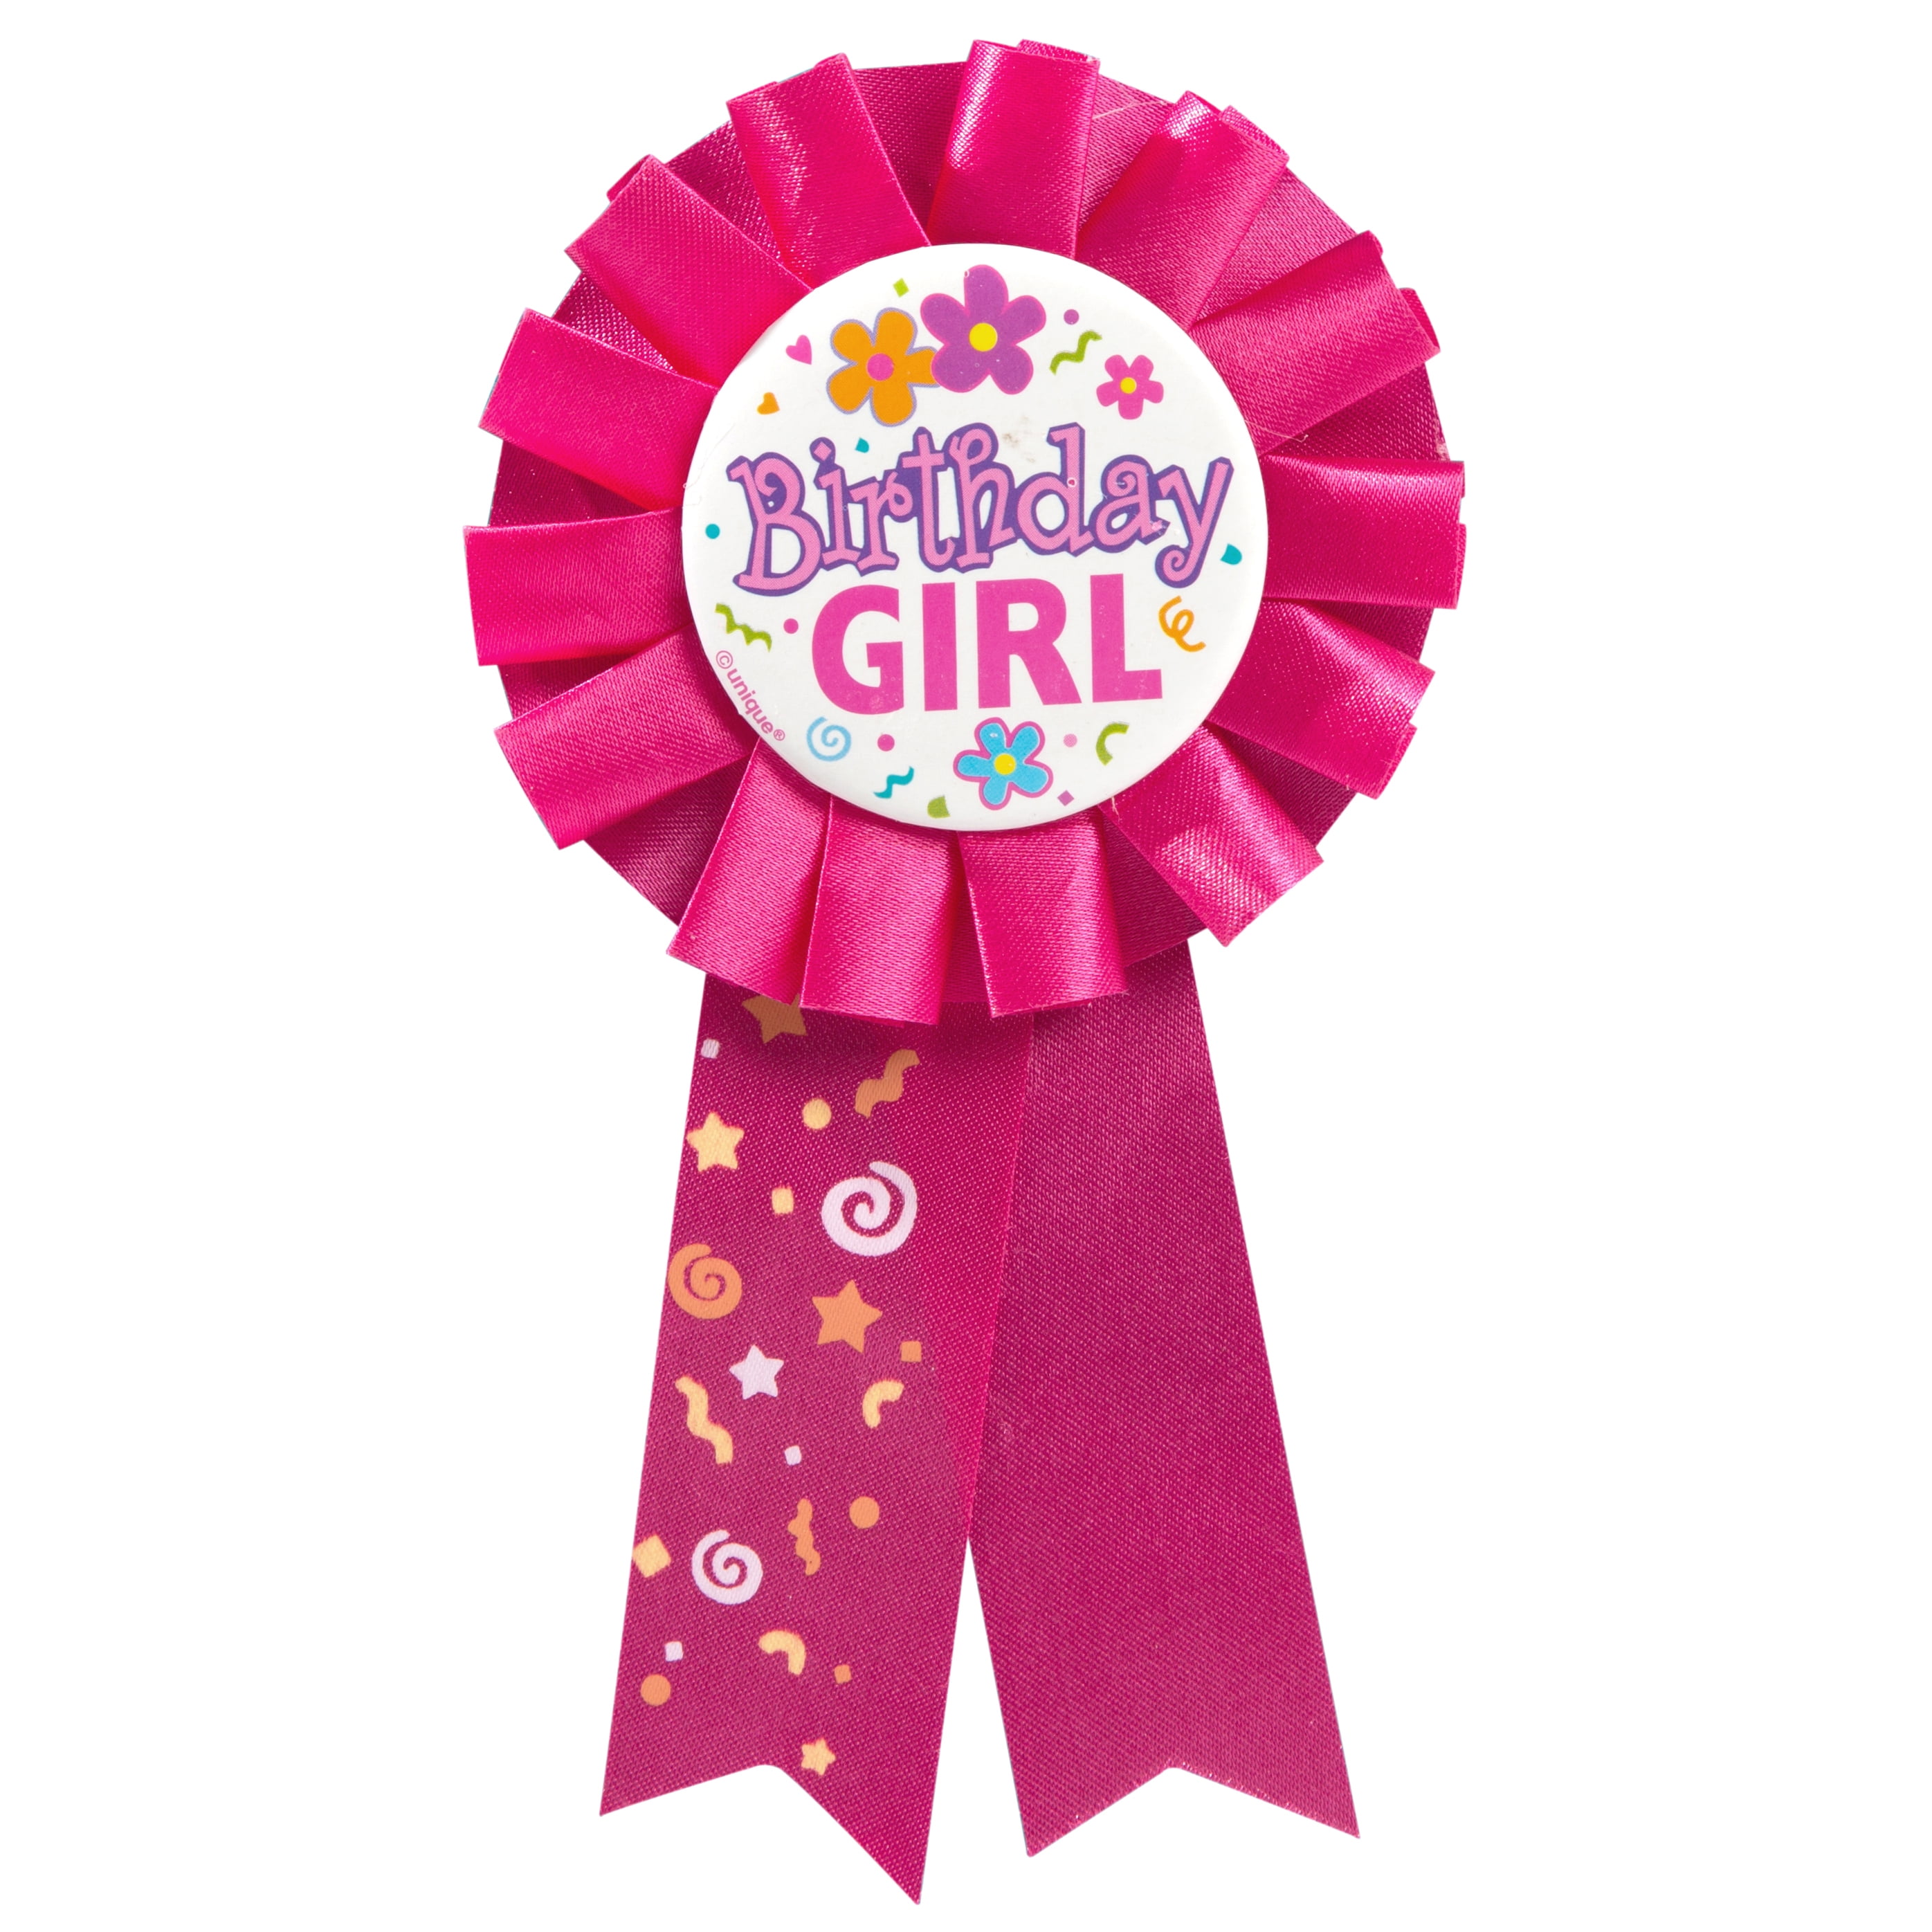 Birthday Girl Award Badge, Hot Pink, 1ct